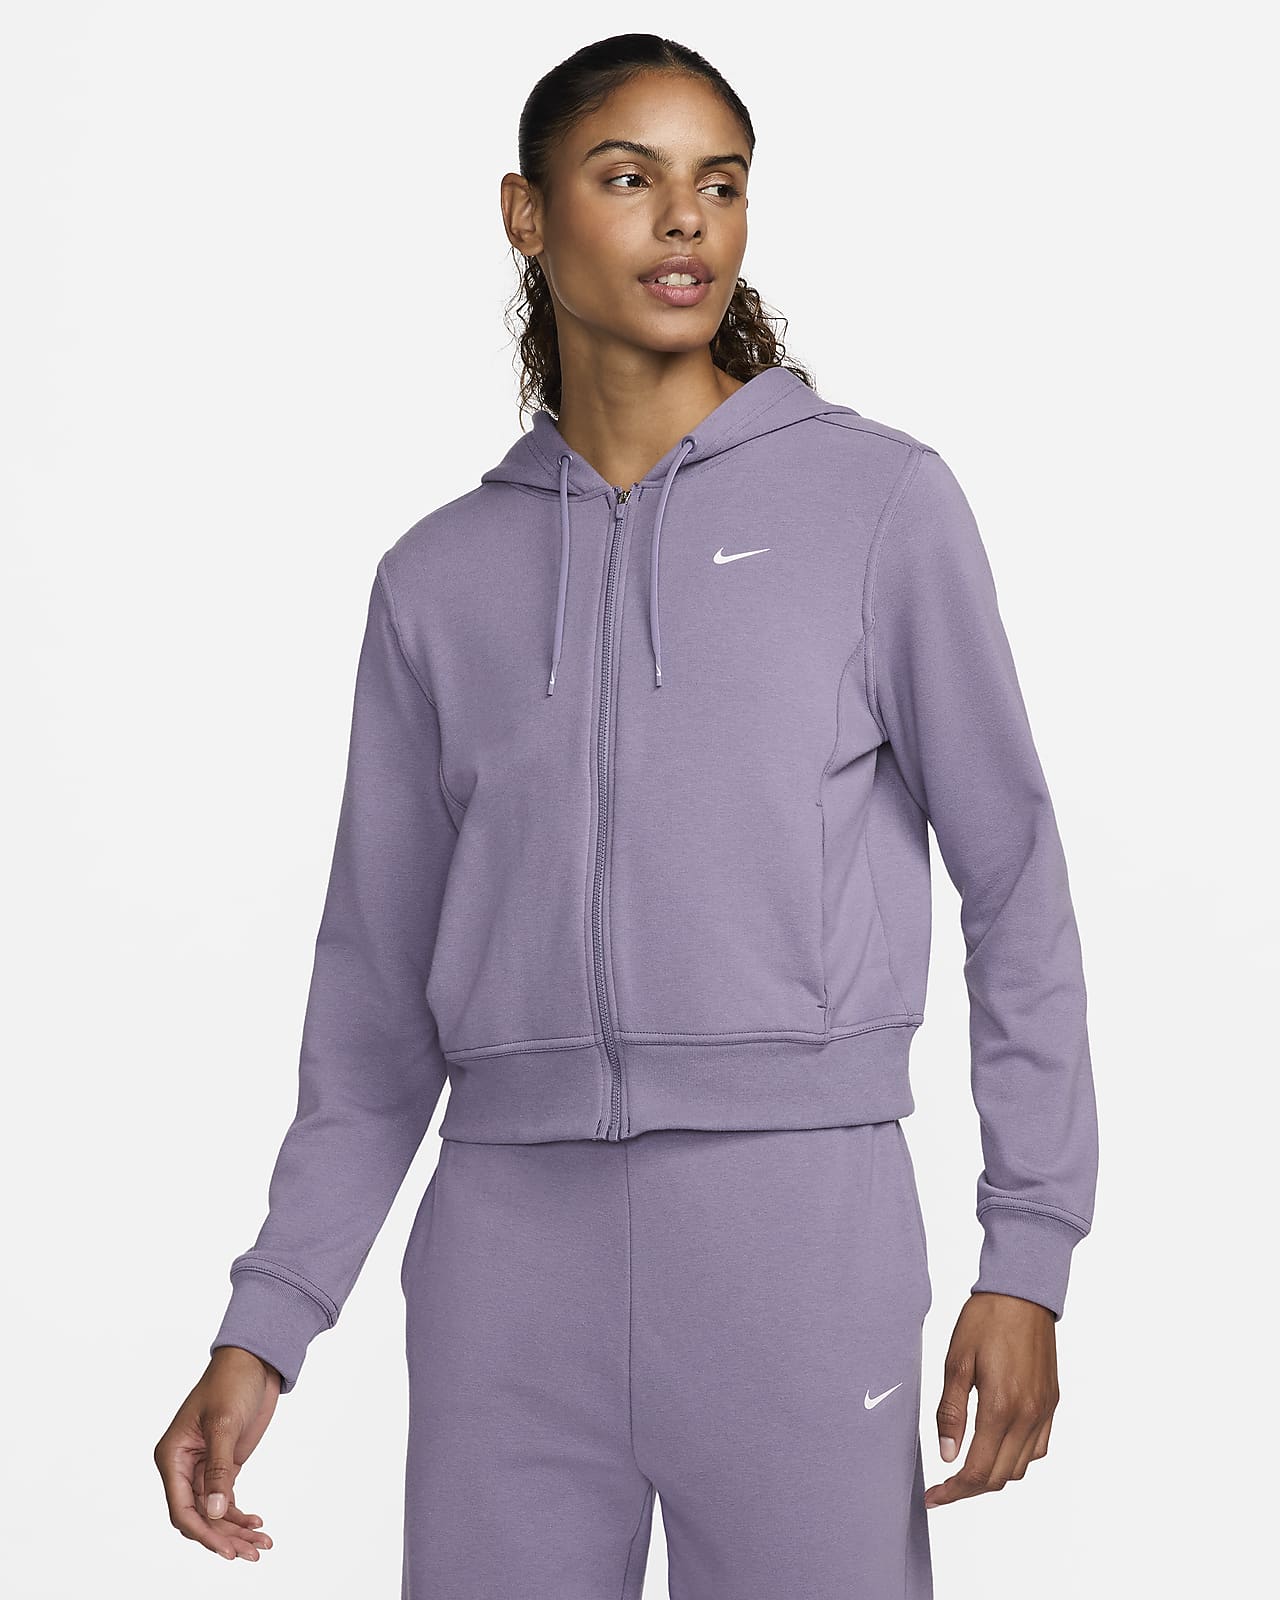 Nike Sportswear Essential W BV4122 010 sweatshirt – Your Sports Performance